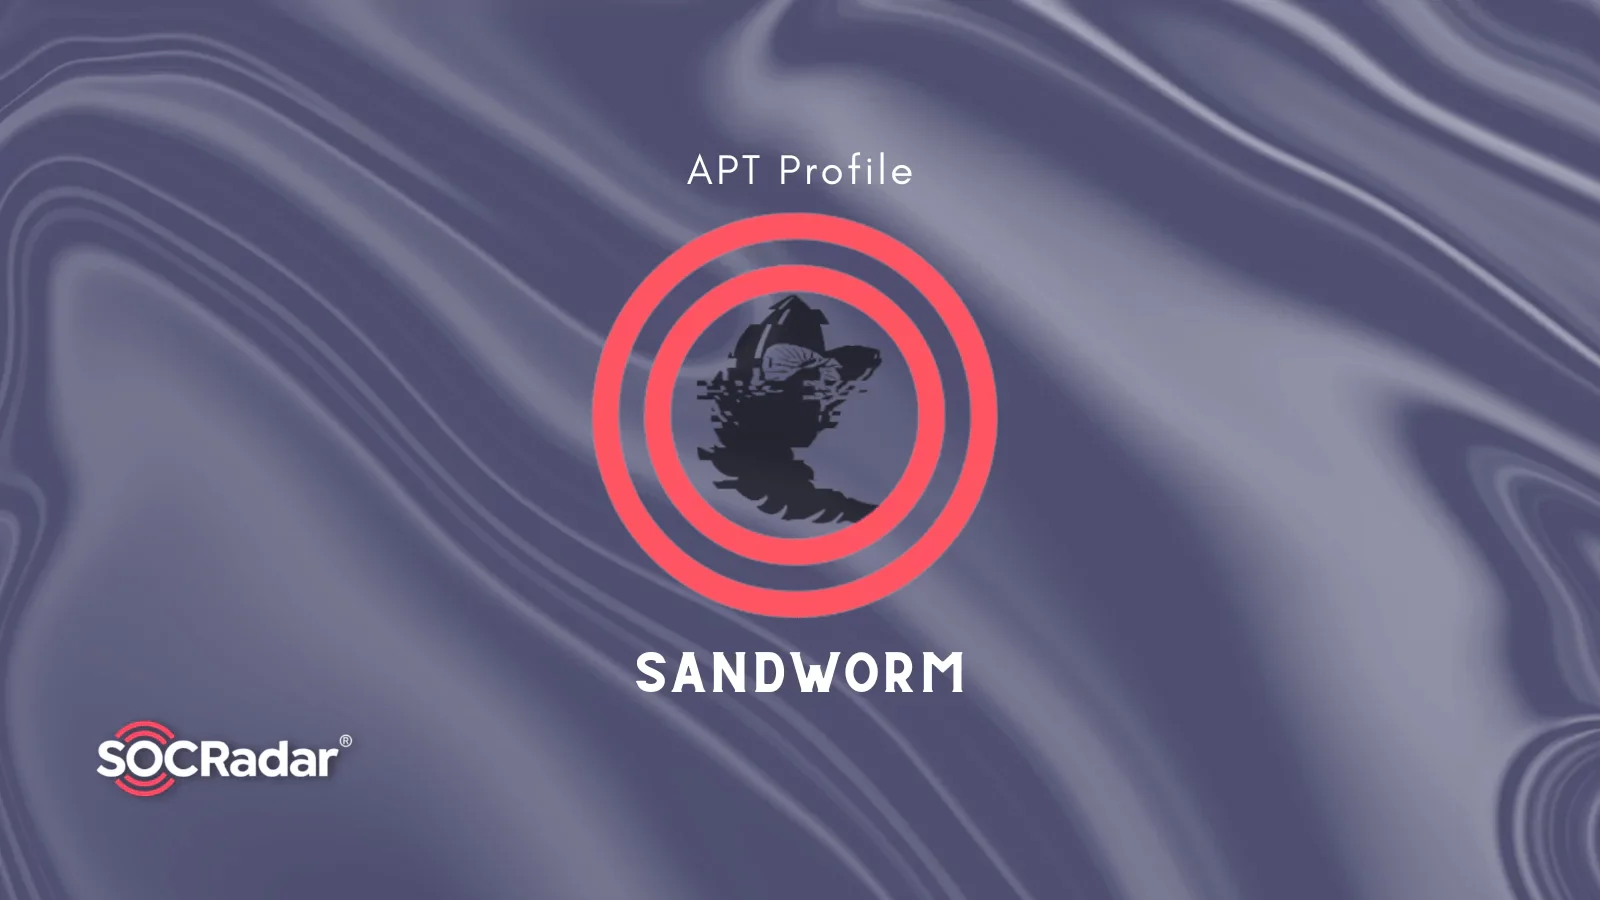 Sandworm Threat Actor Profile - SOCRadar